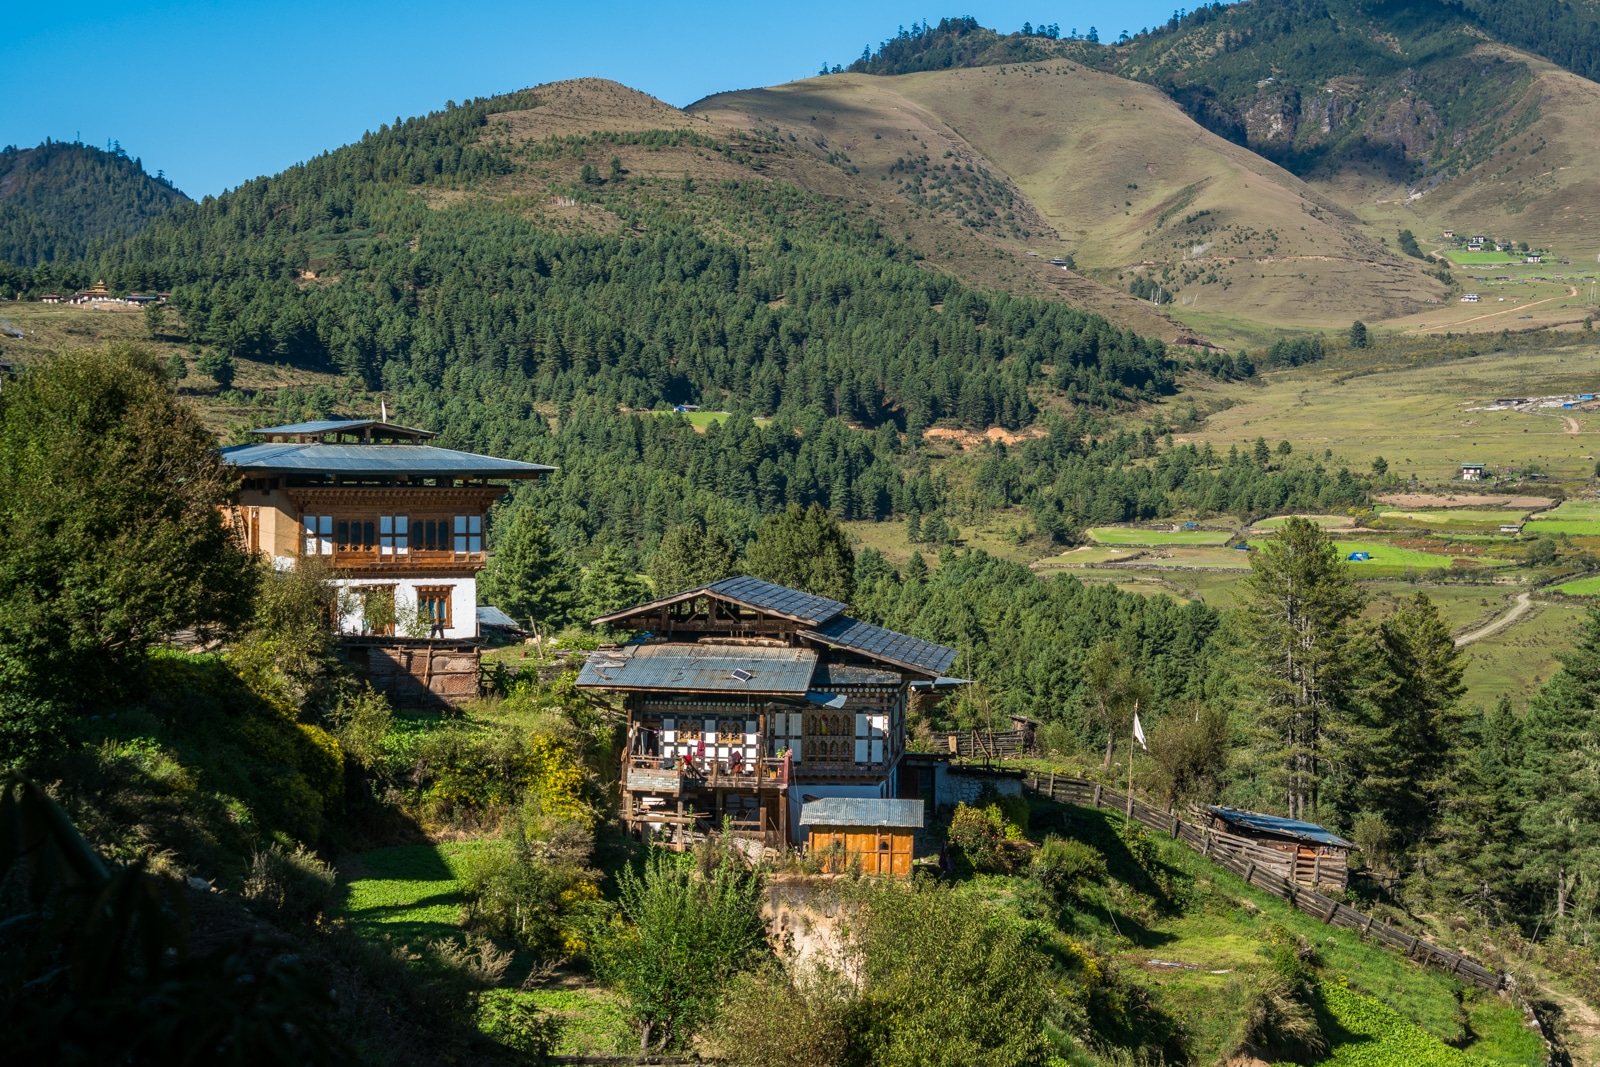 Traditional Bhutanese houses in Phobjikha Valley